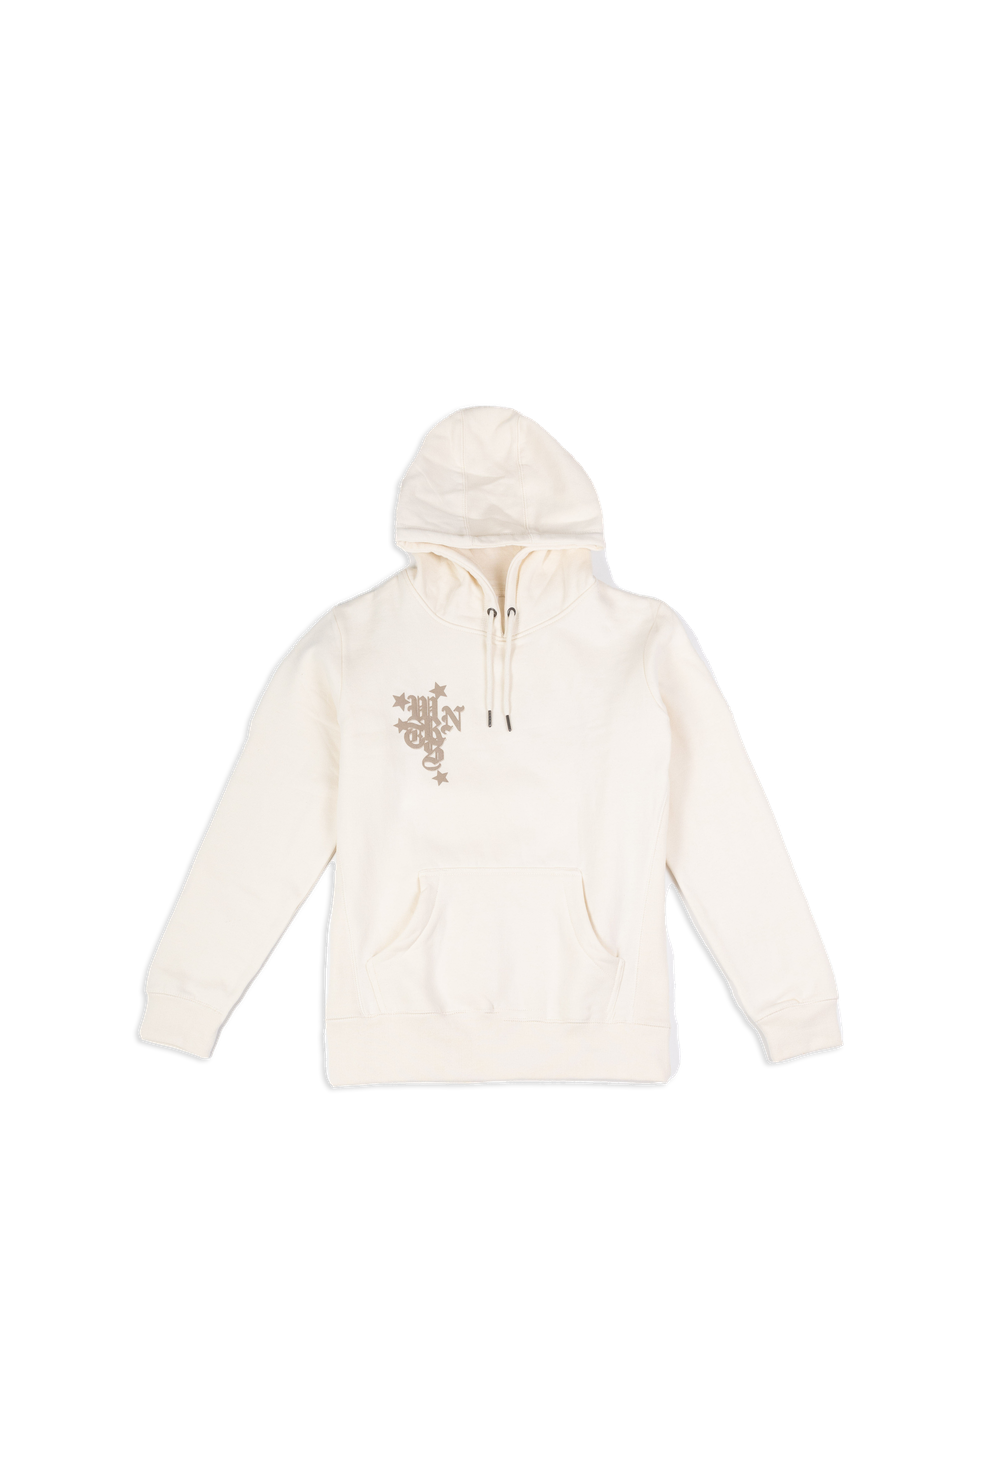 wrnts hoodie in cream - Different Streetwear